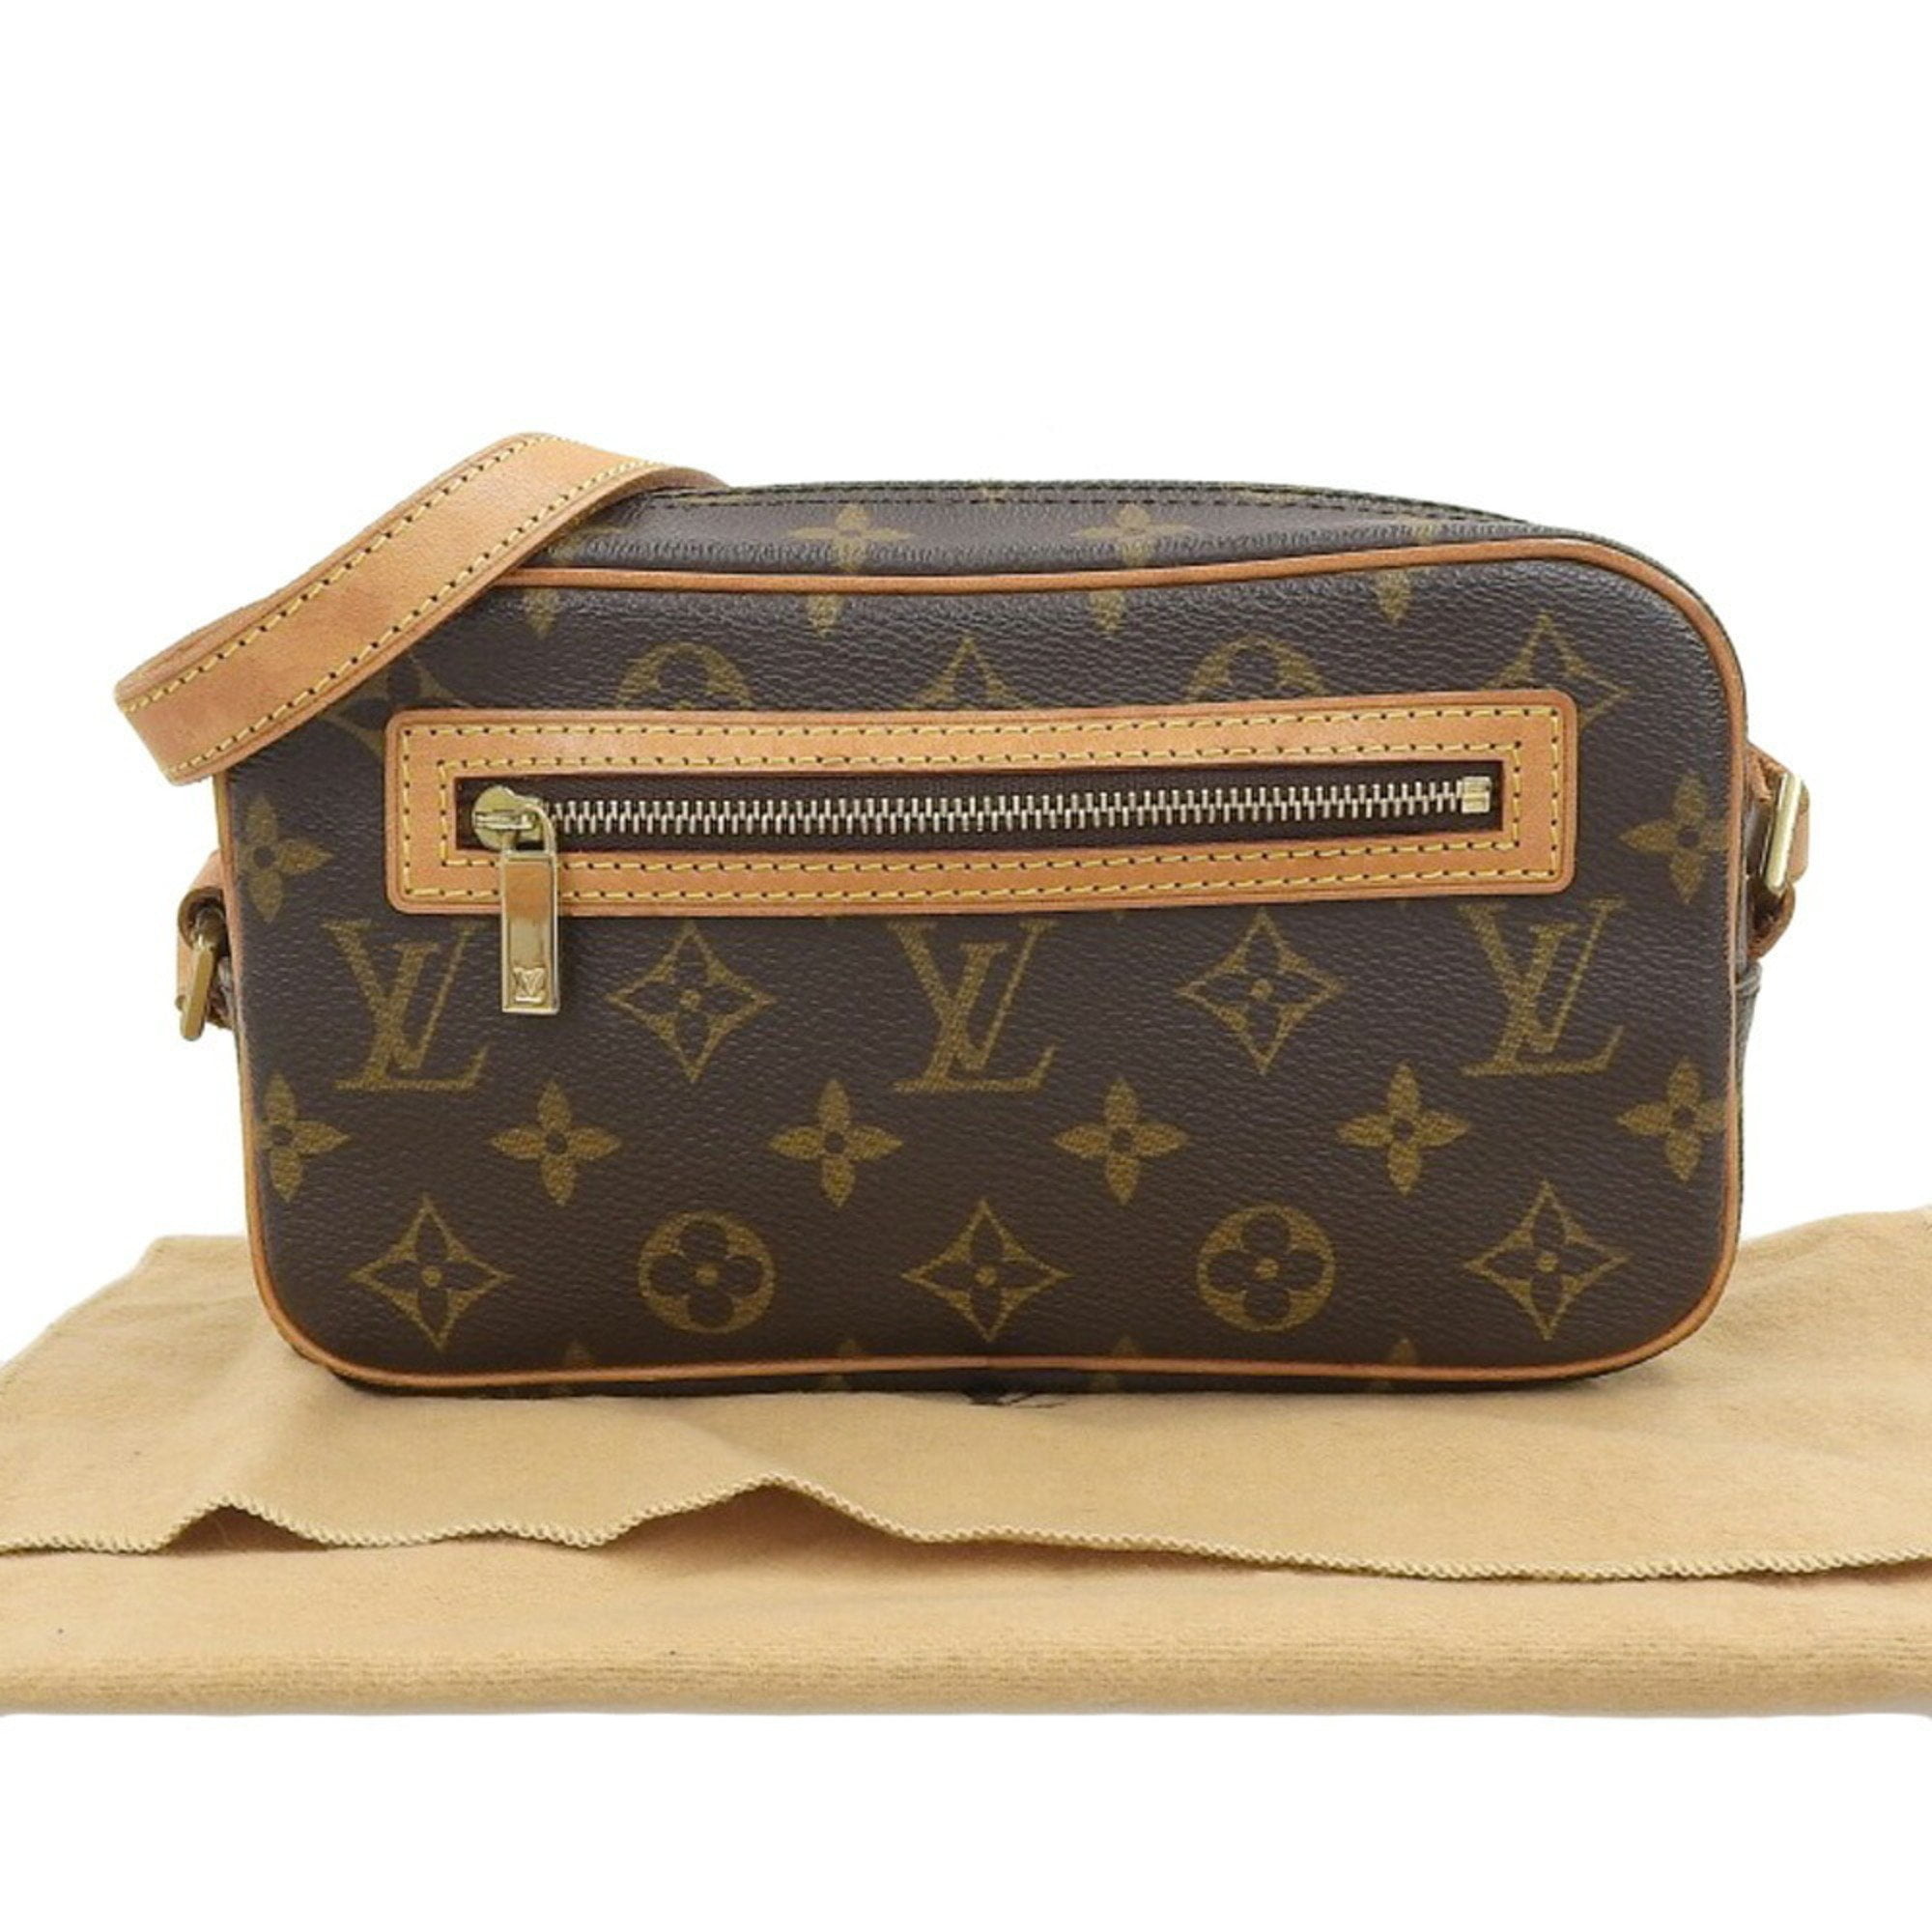 How To Authenticate a Louis Vuitton Pochette Bag